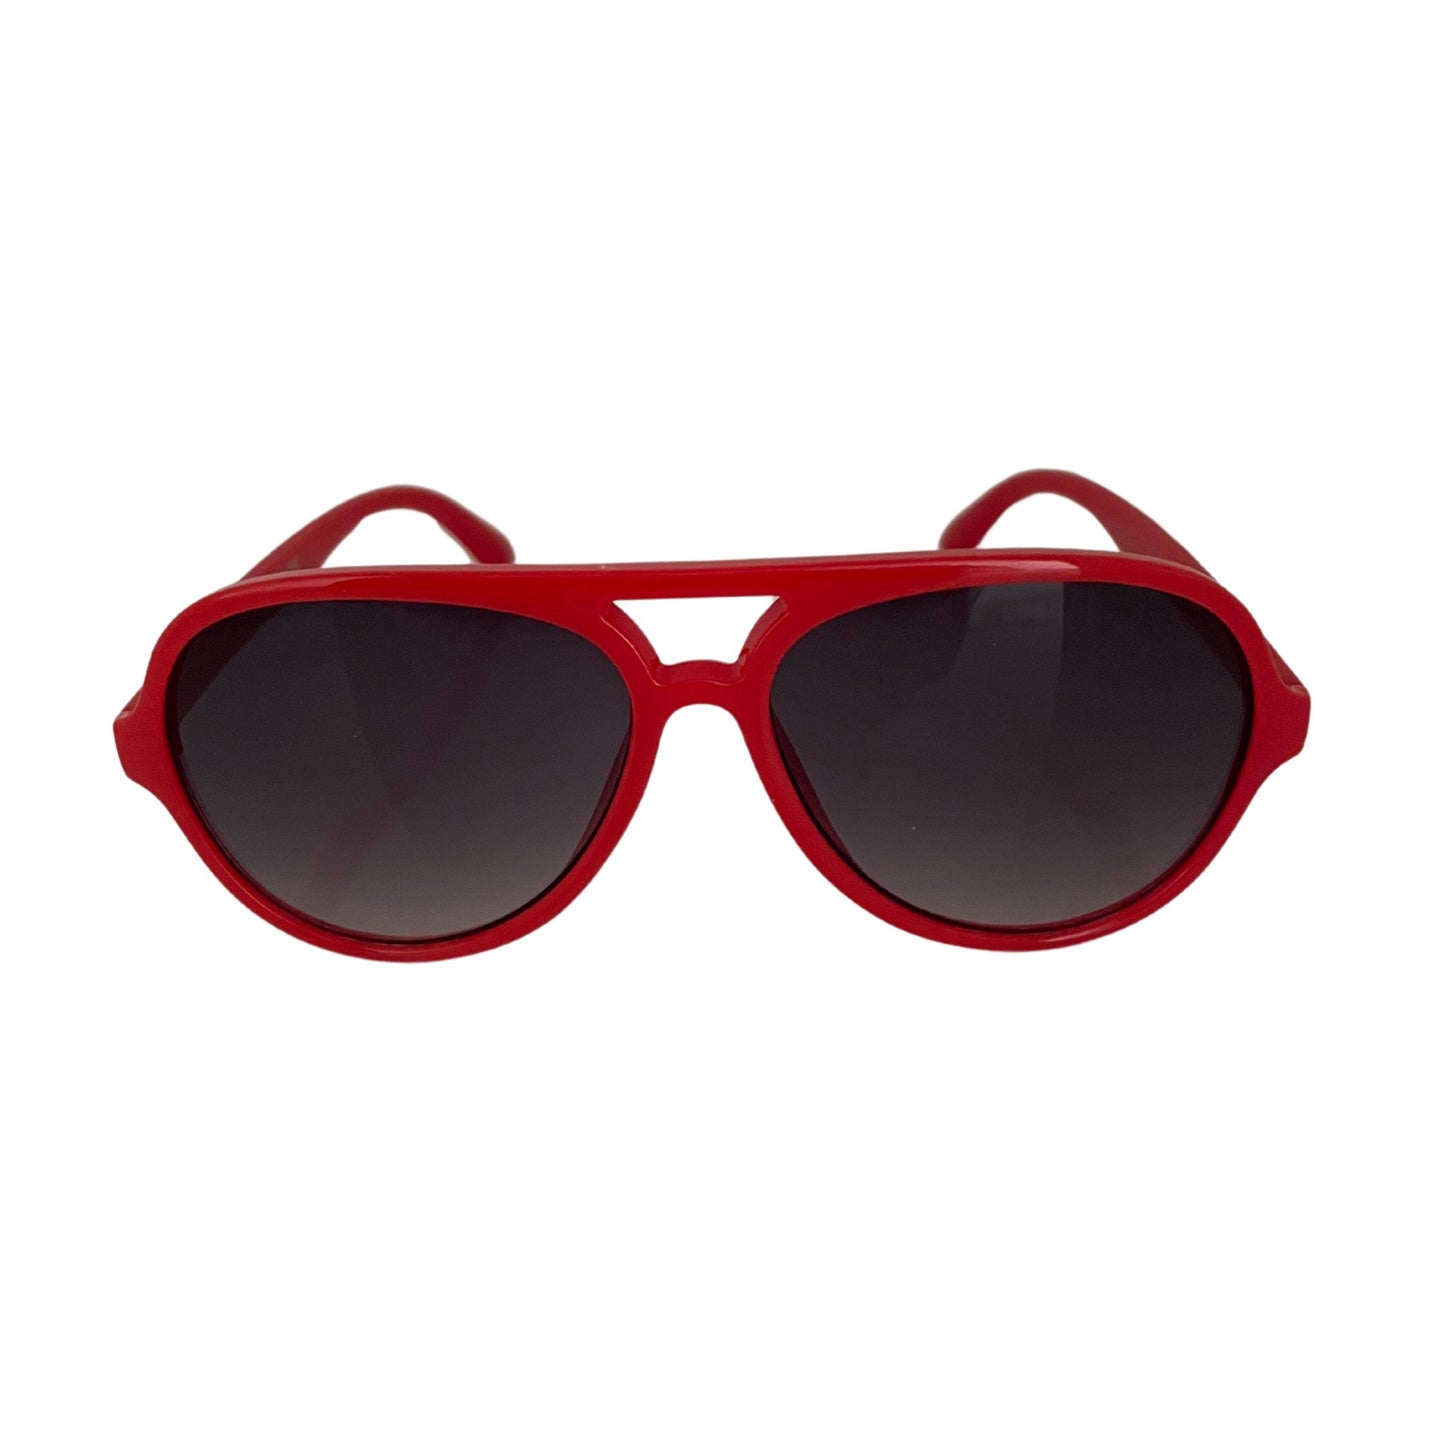 Kids Classic Aviator Sunglasses - Lava Lamp Red